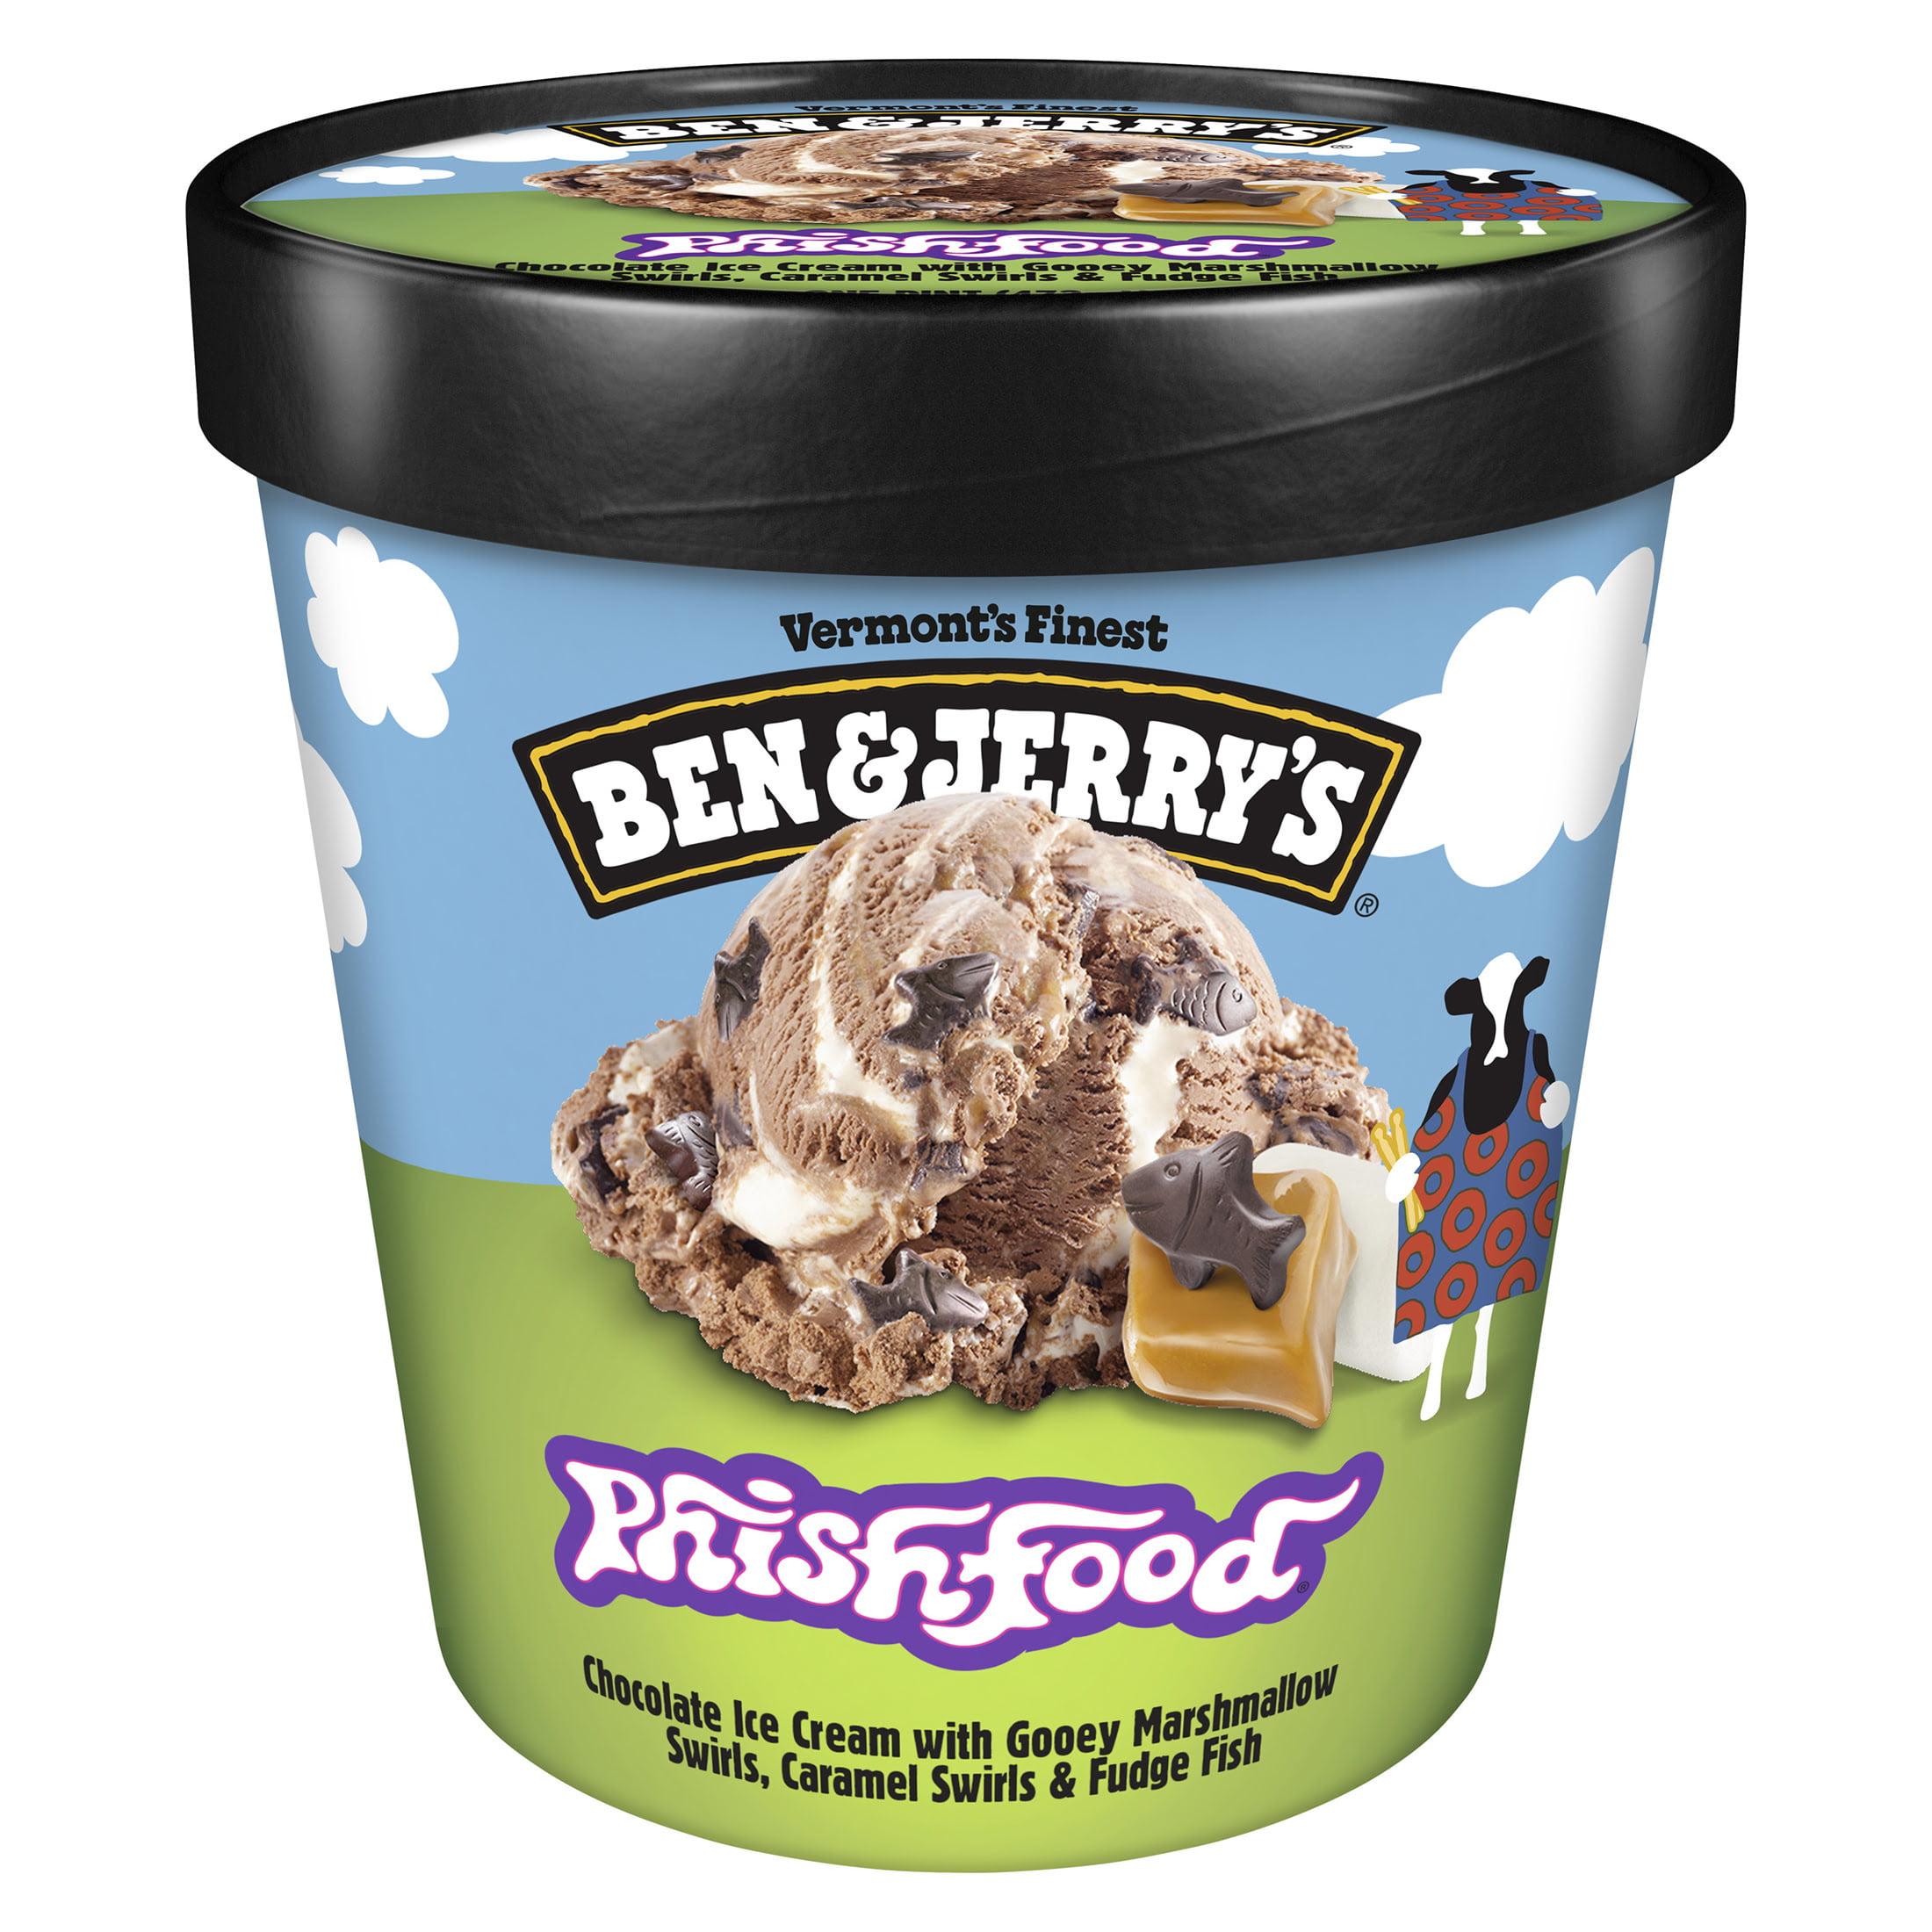 Ben & Jerry's Phish Food Chocolate Ice Cream, 16 oz - image 1 of 7